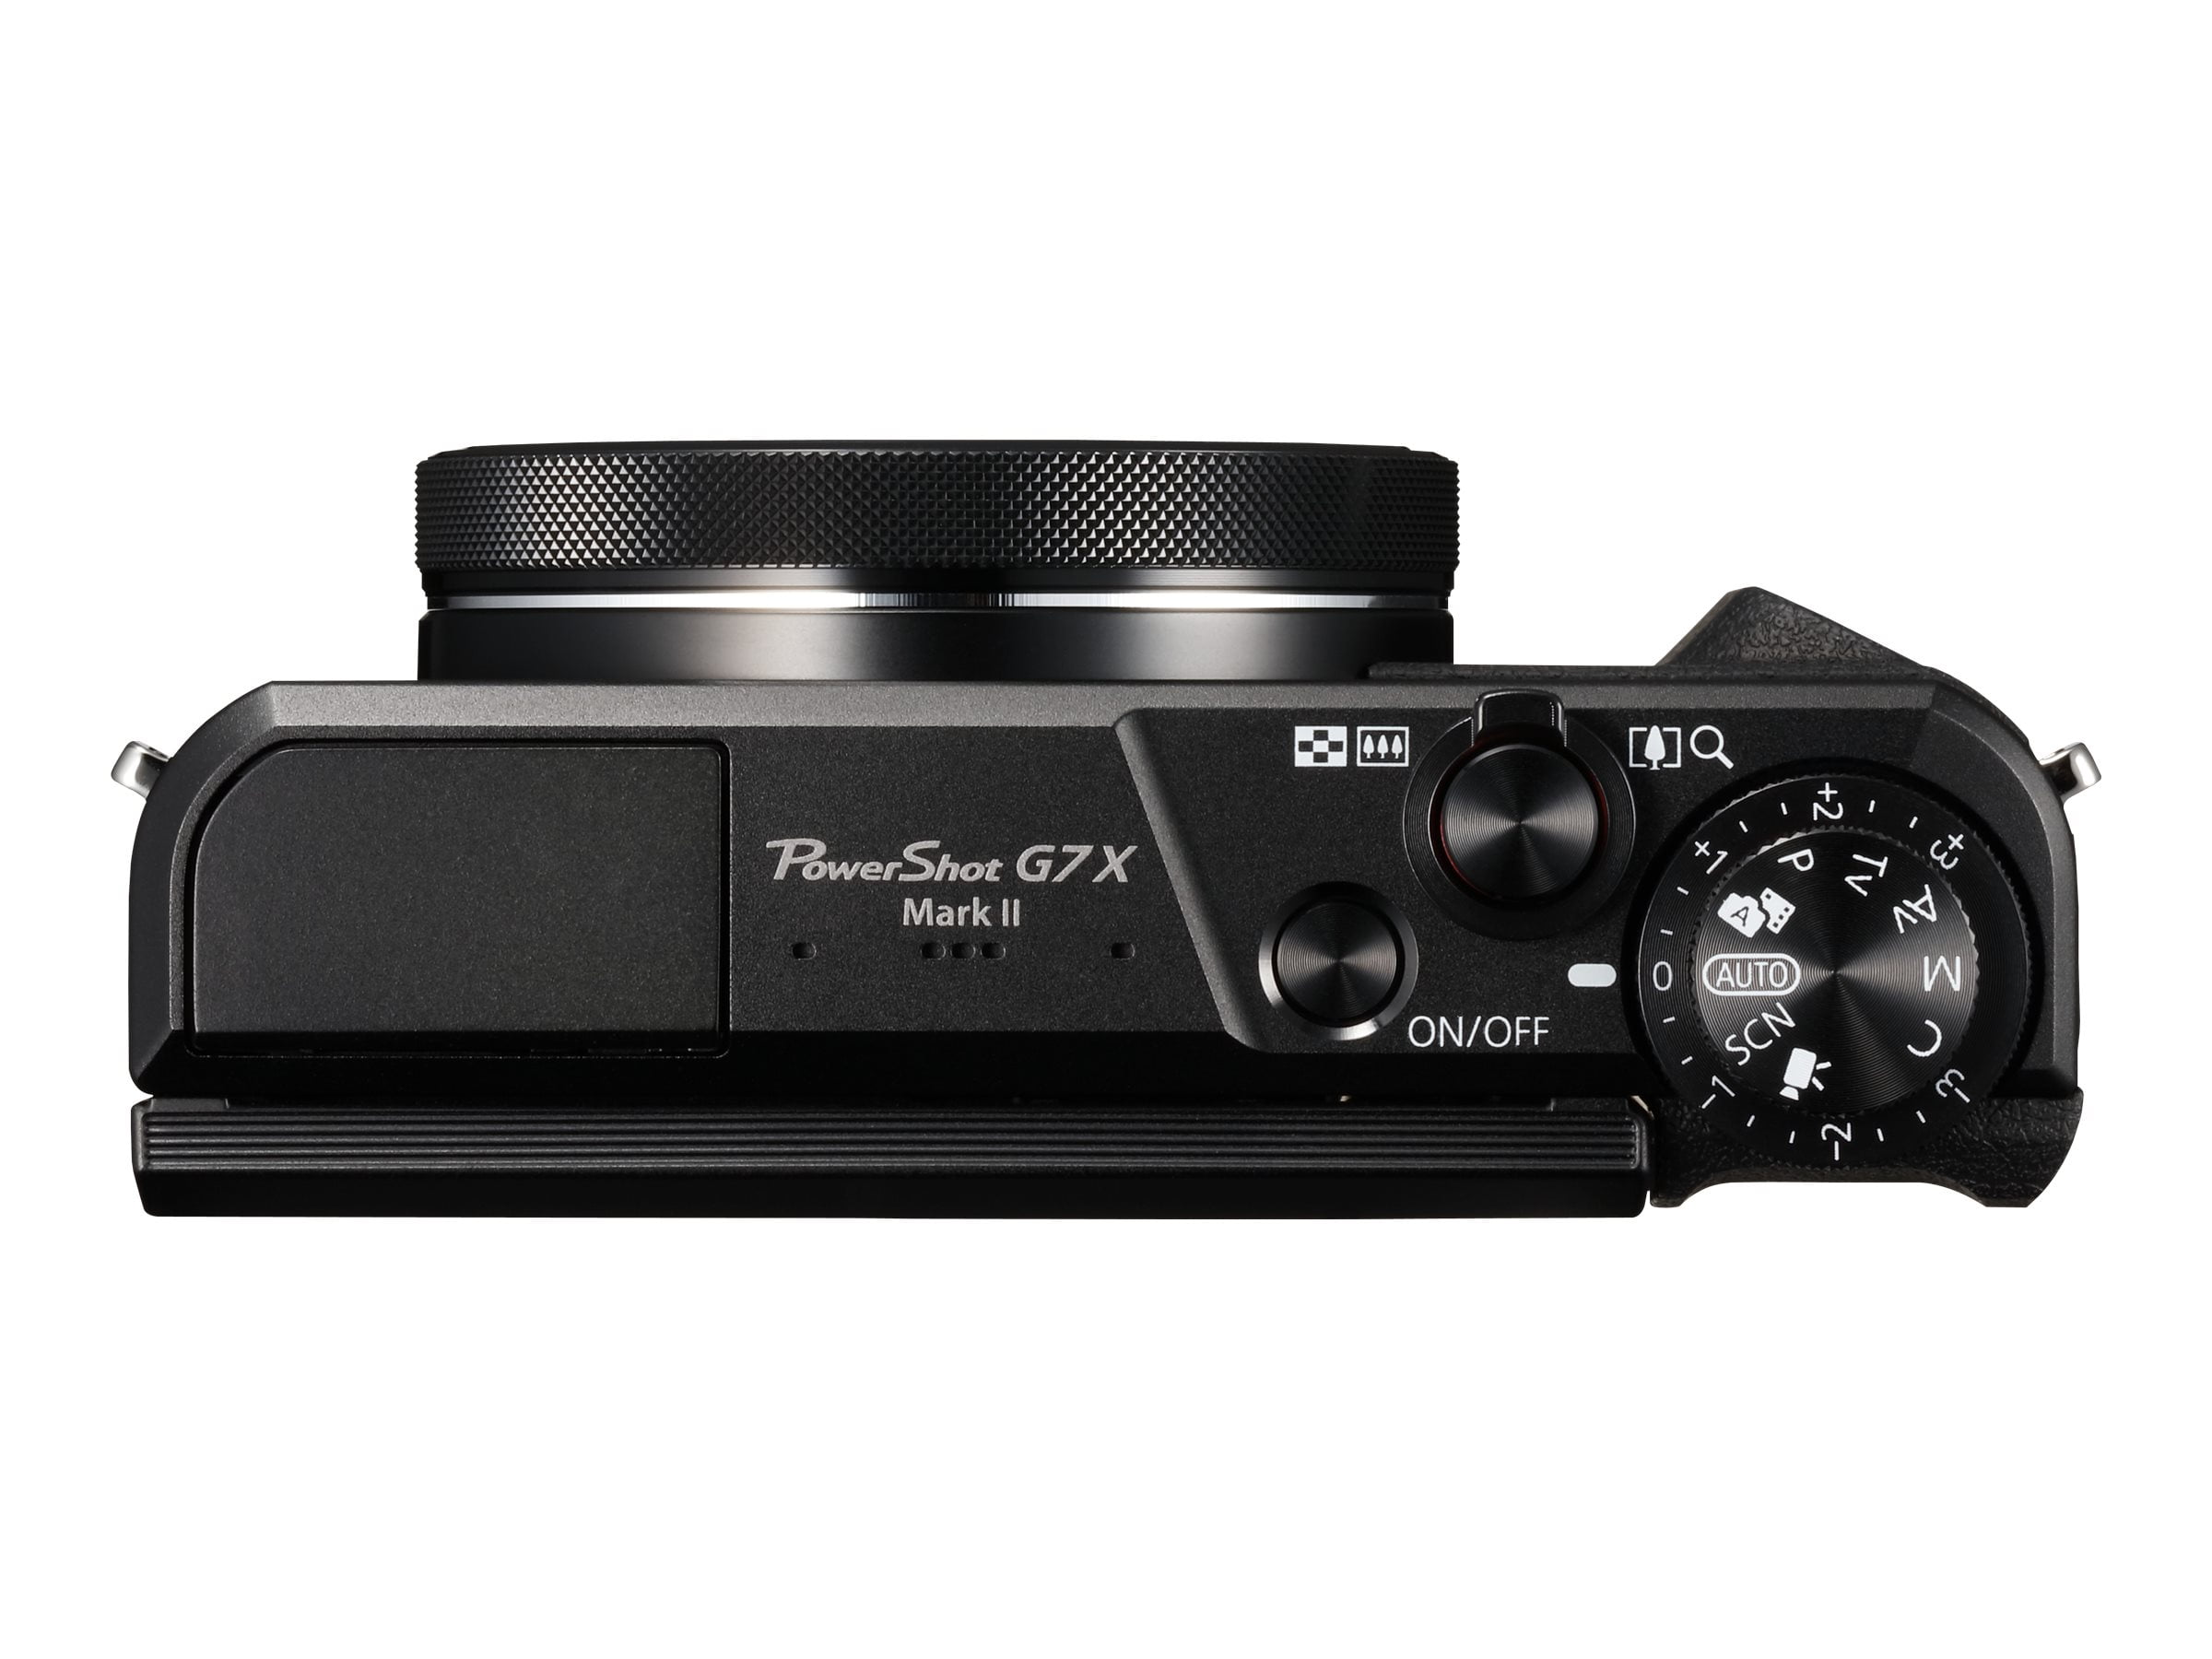 Canon PowerShot G7 X Mark II Digital Camera + Pixi-Basic Accessory Kit-  International Version (Renewed)